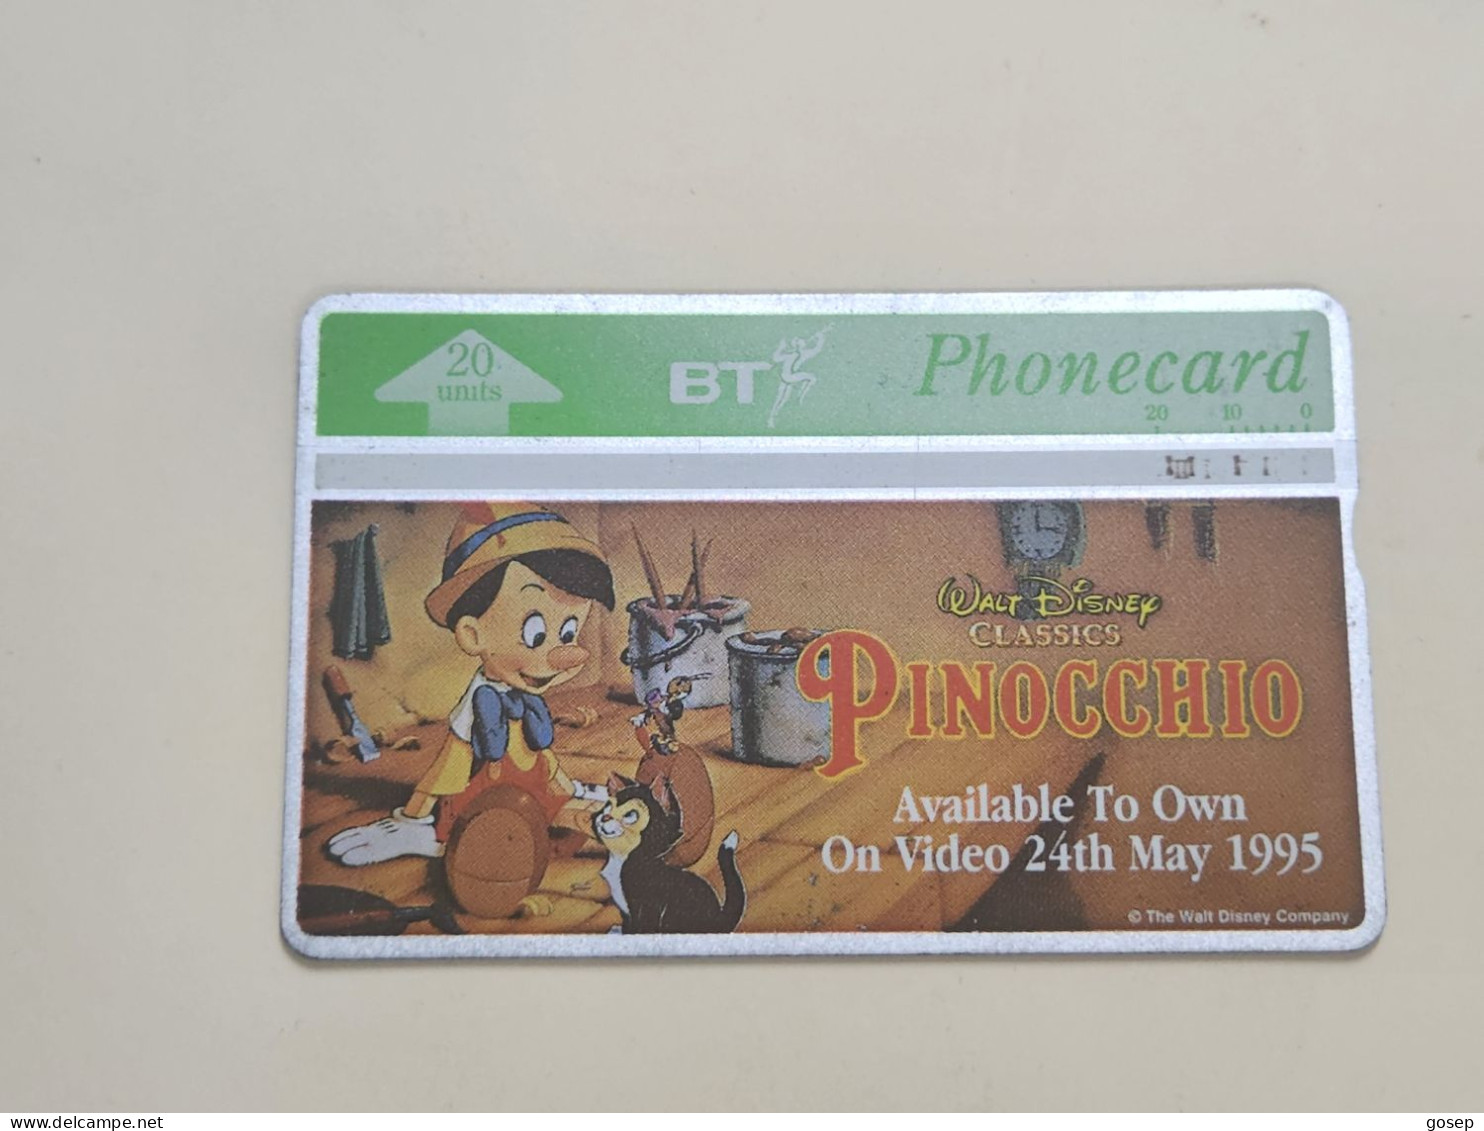 United Kingdom-(BTA096)-PINOCCHIO-PAINTING-(20units)(148)(525F99057)-price Cataloge1.00£ Used+1card Prepiad Free - BT Advertising Issues